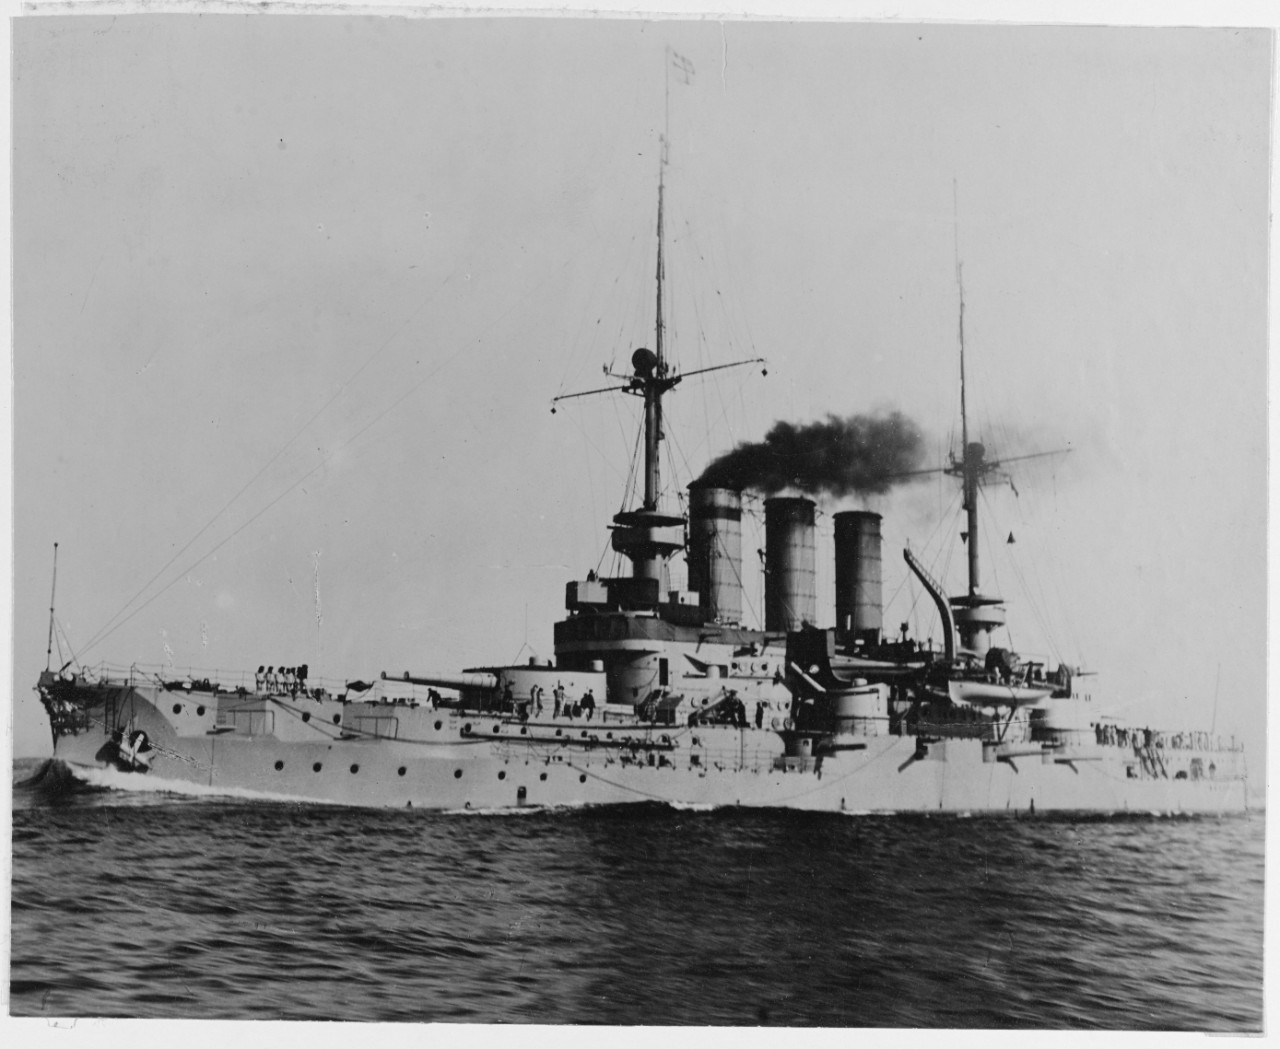 PREUSSEN (German battleship, 1903-1931)